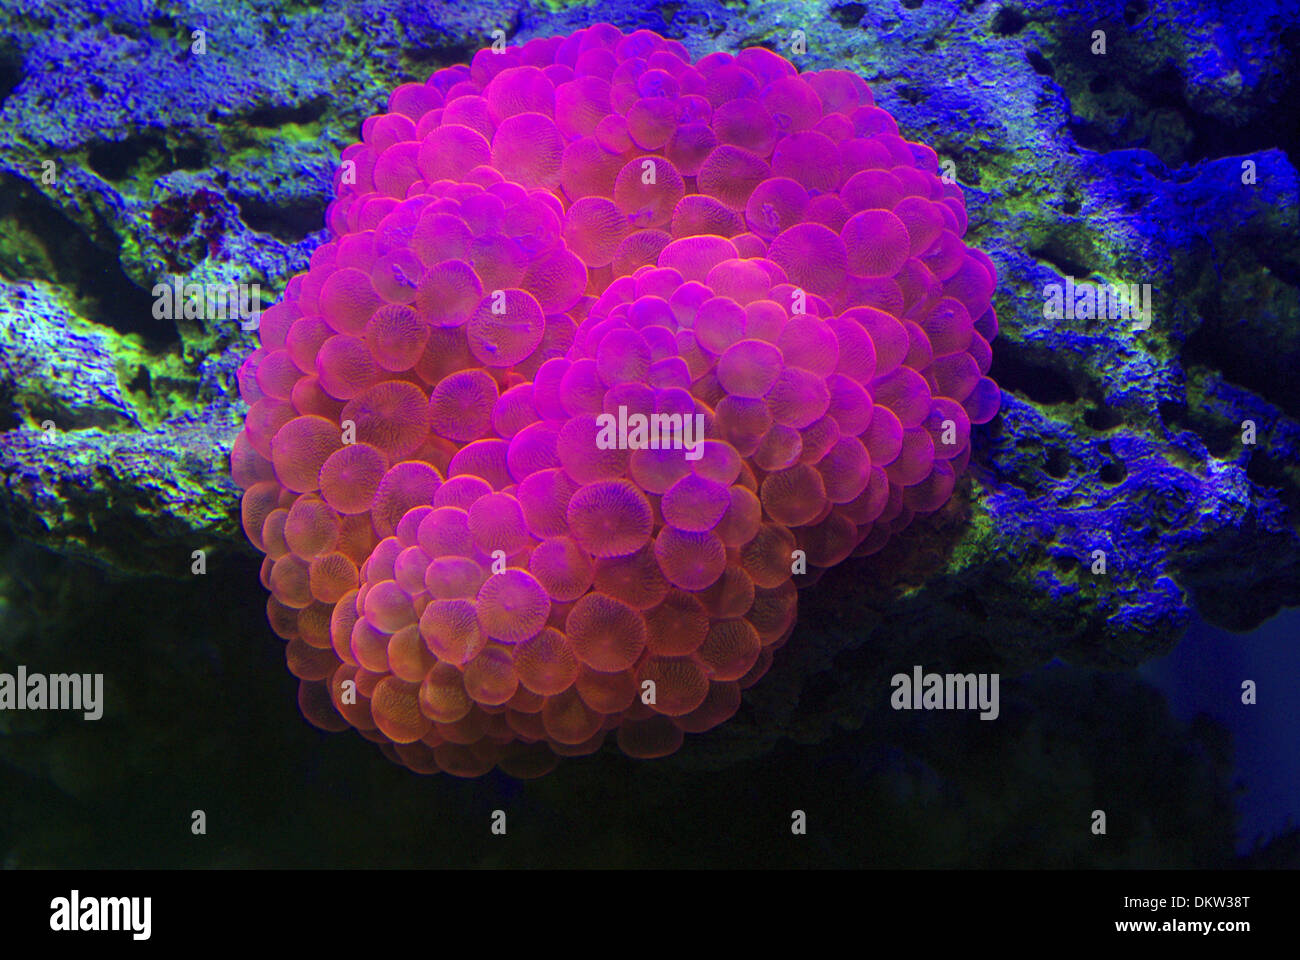 Bubble anemone (Entacmaea quadricolor "Pink") Stock Photo